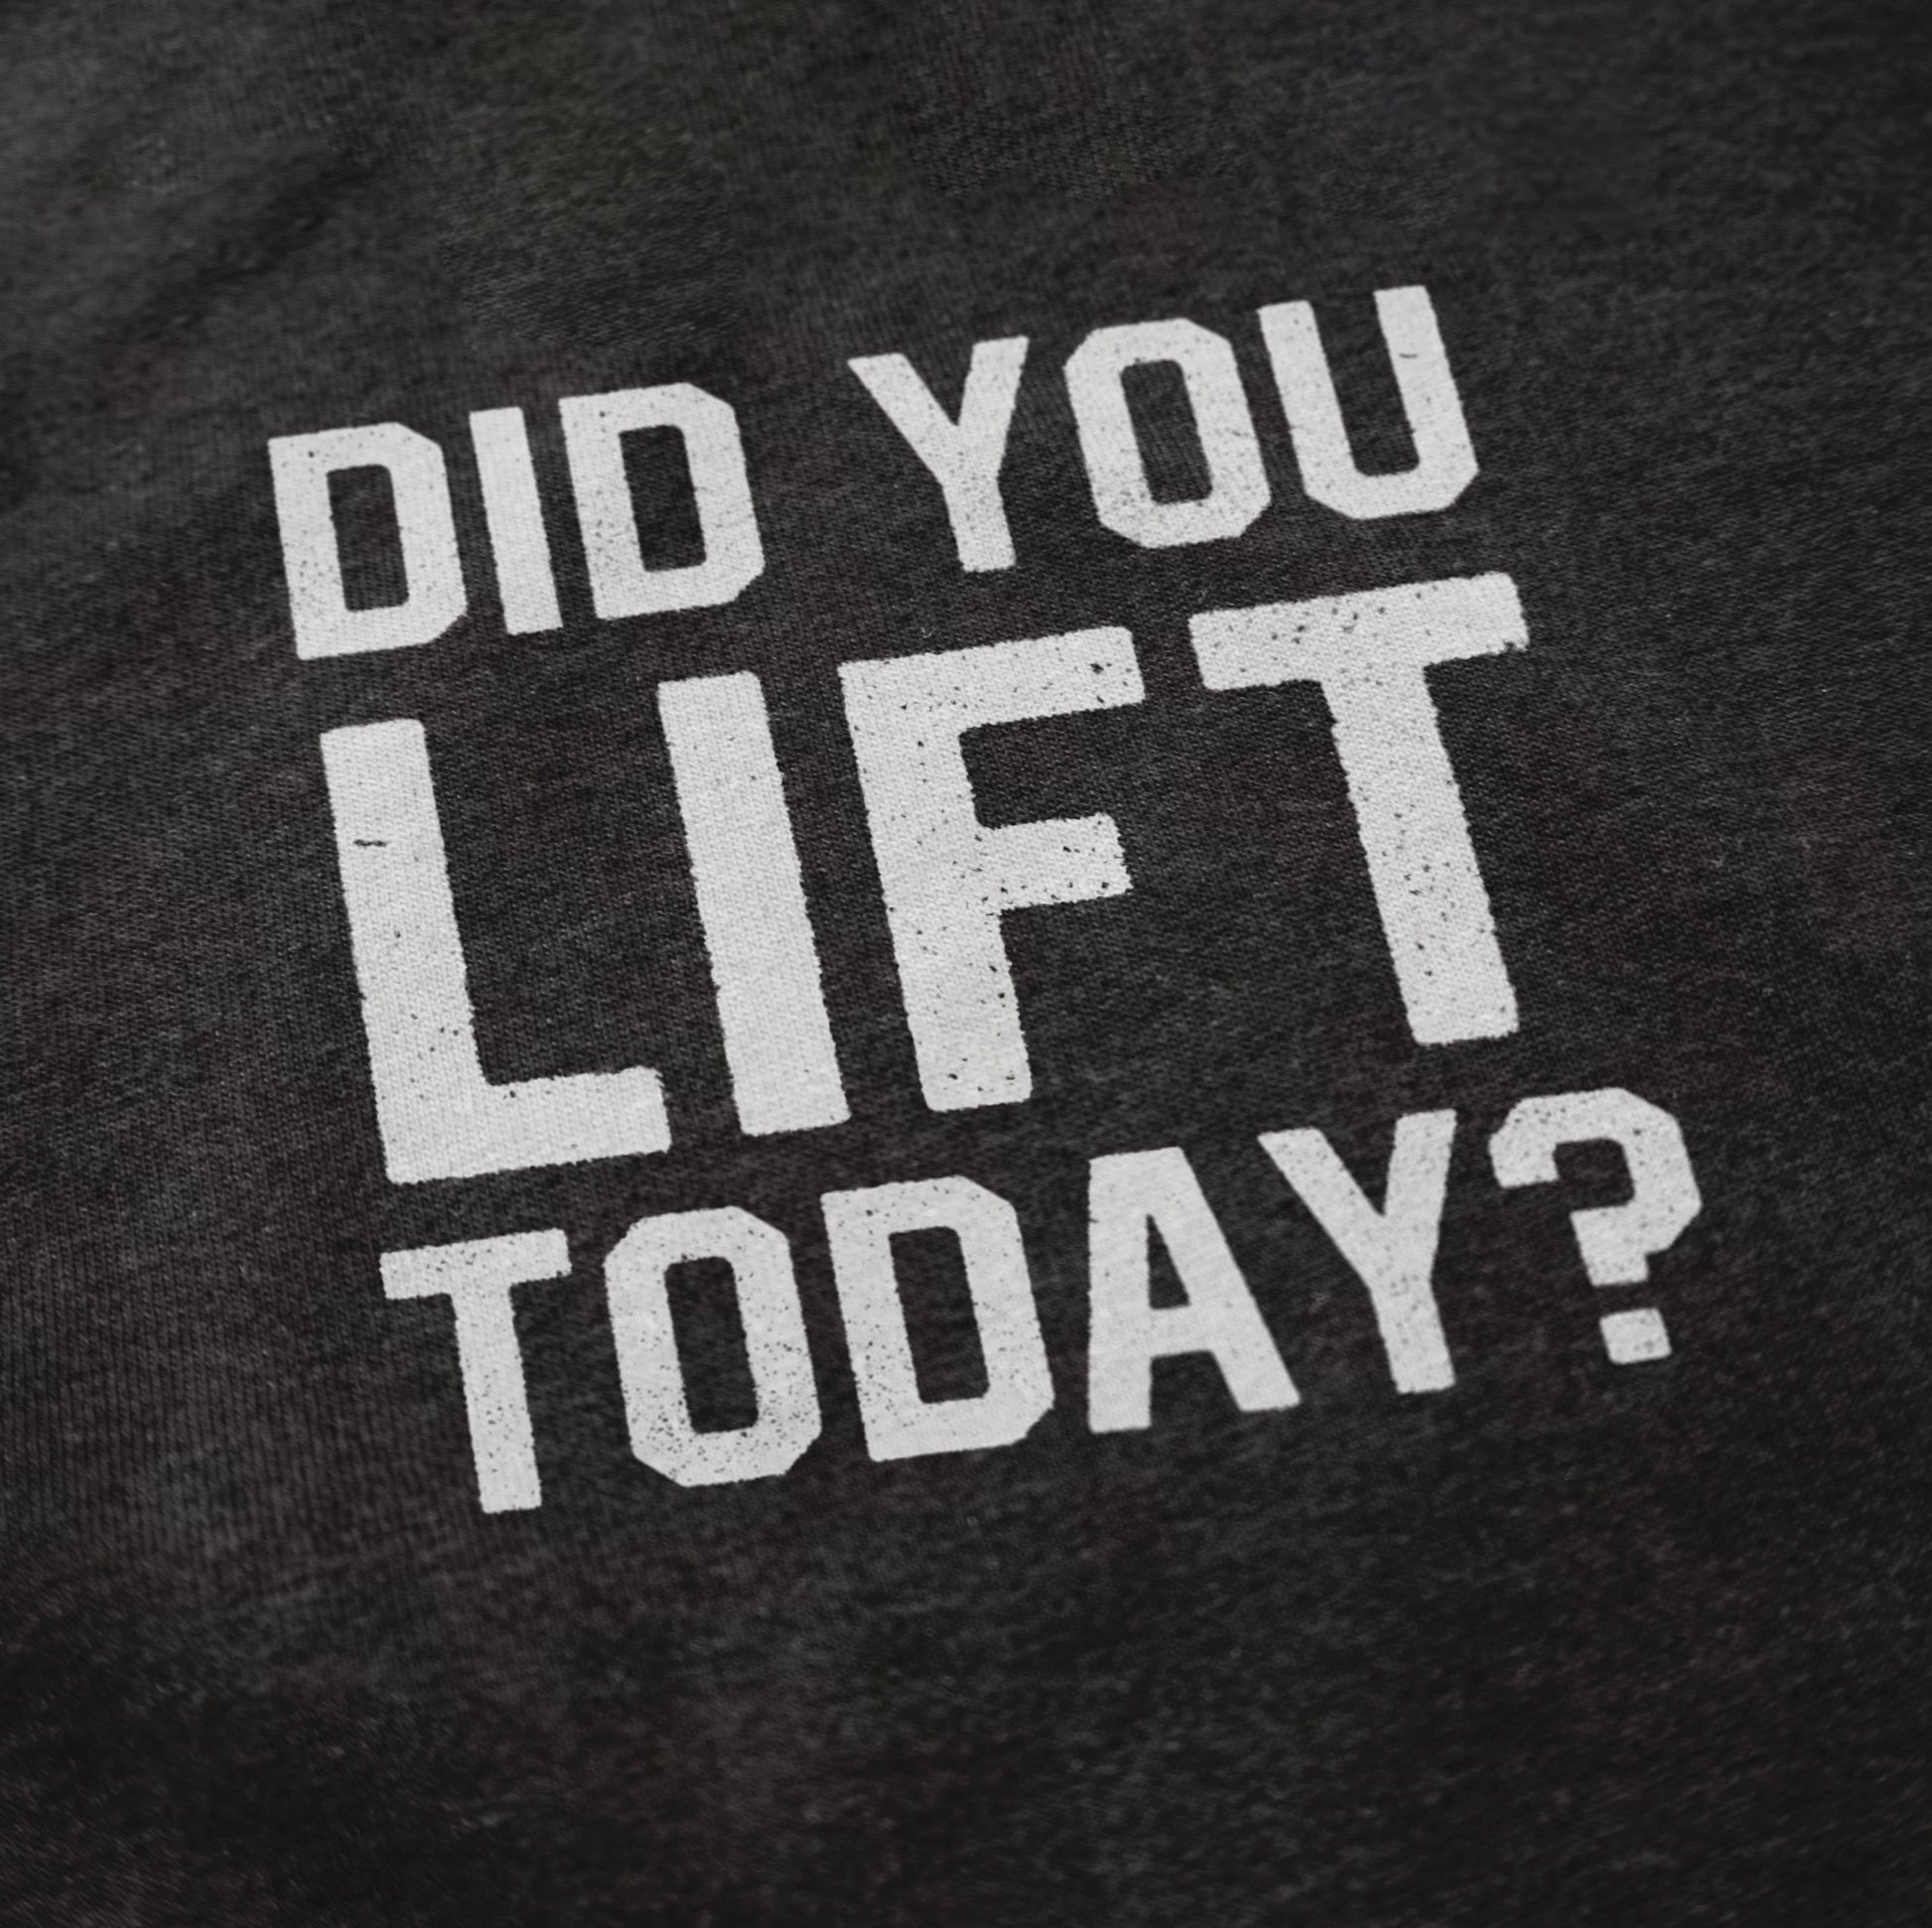 Did You Lift Today Shirt - Shitheadsteve